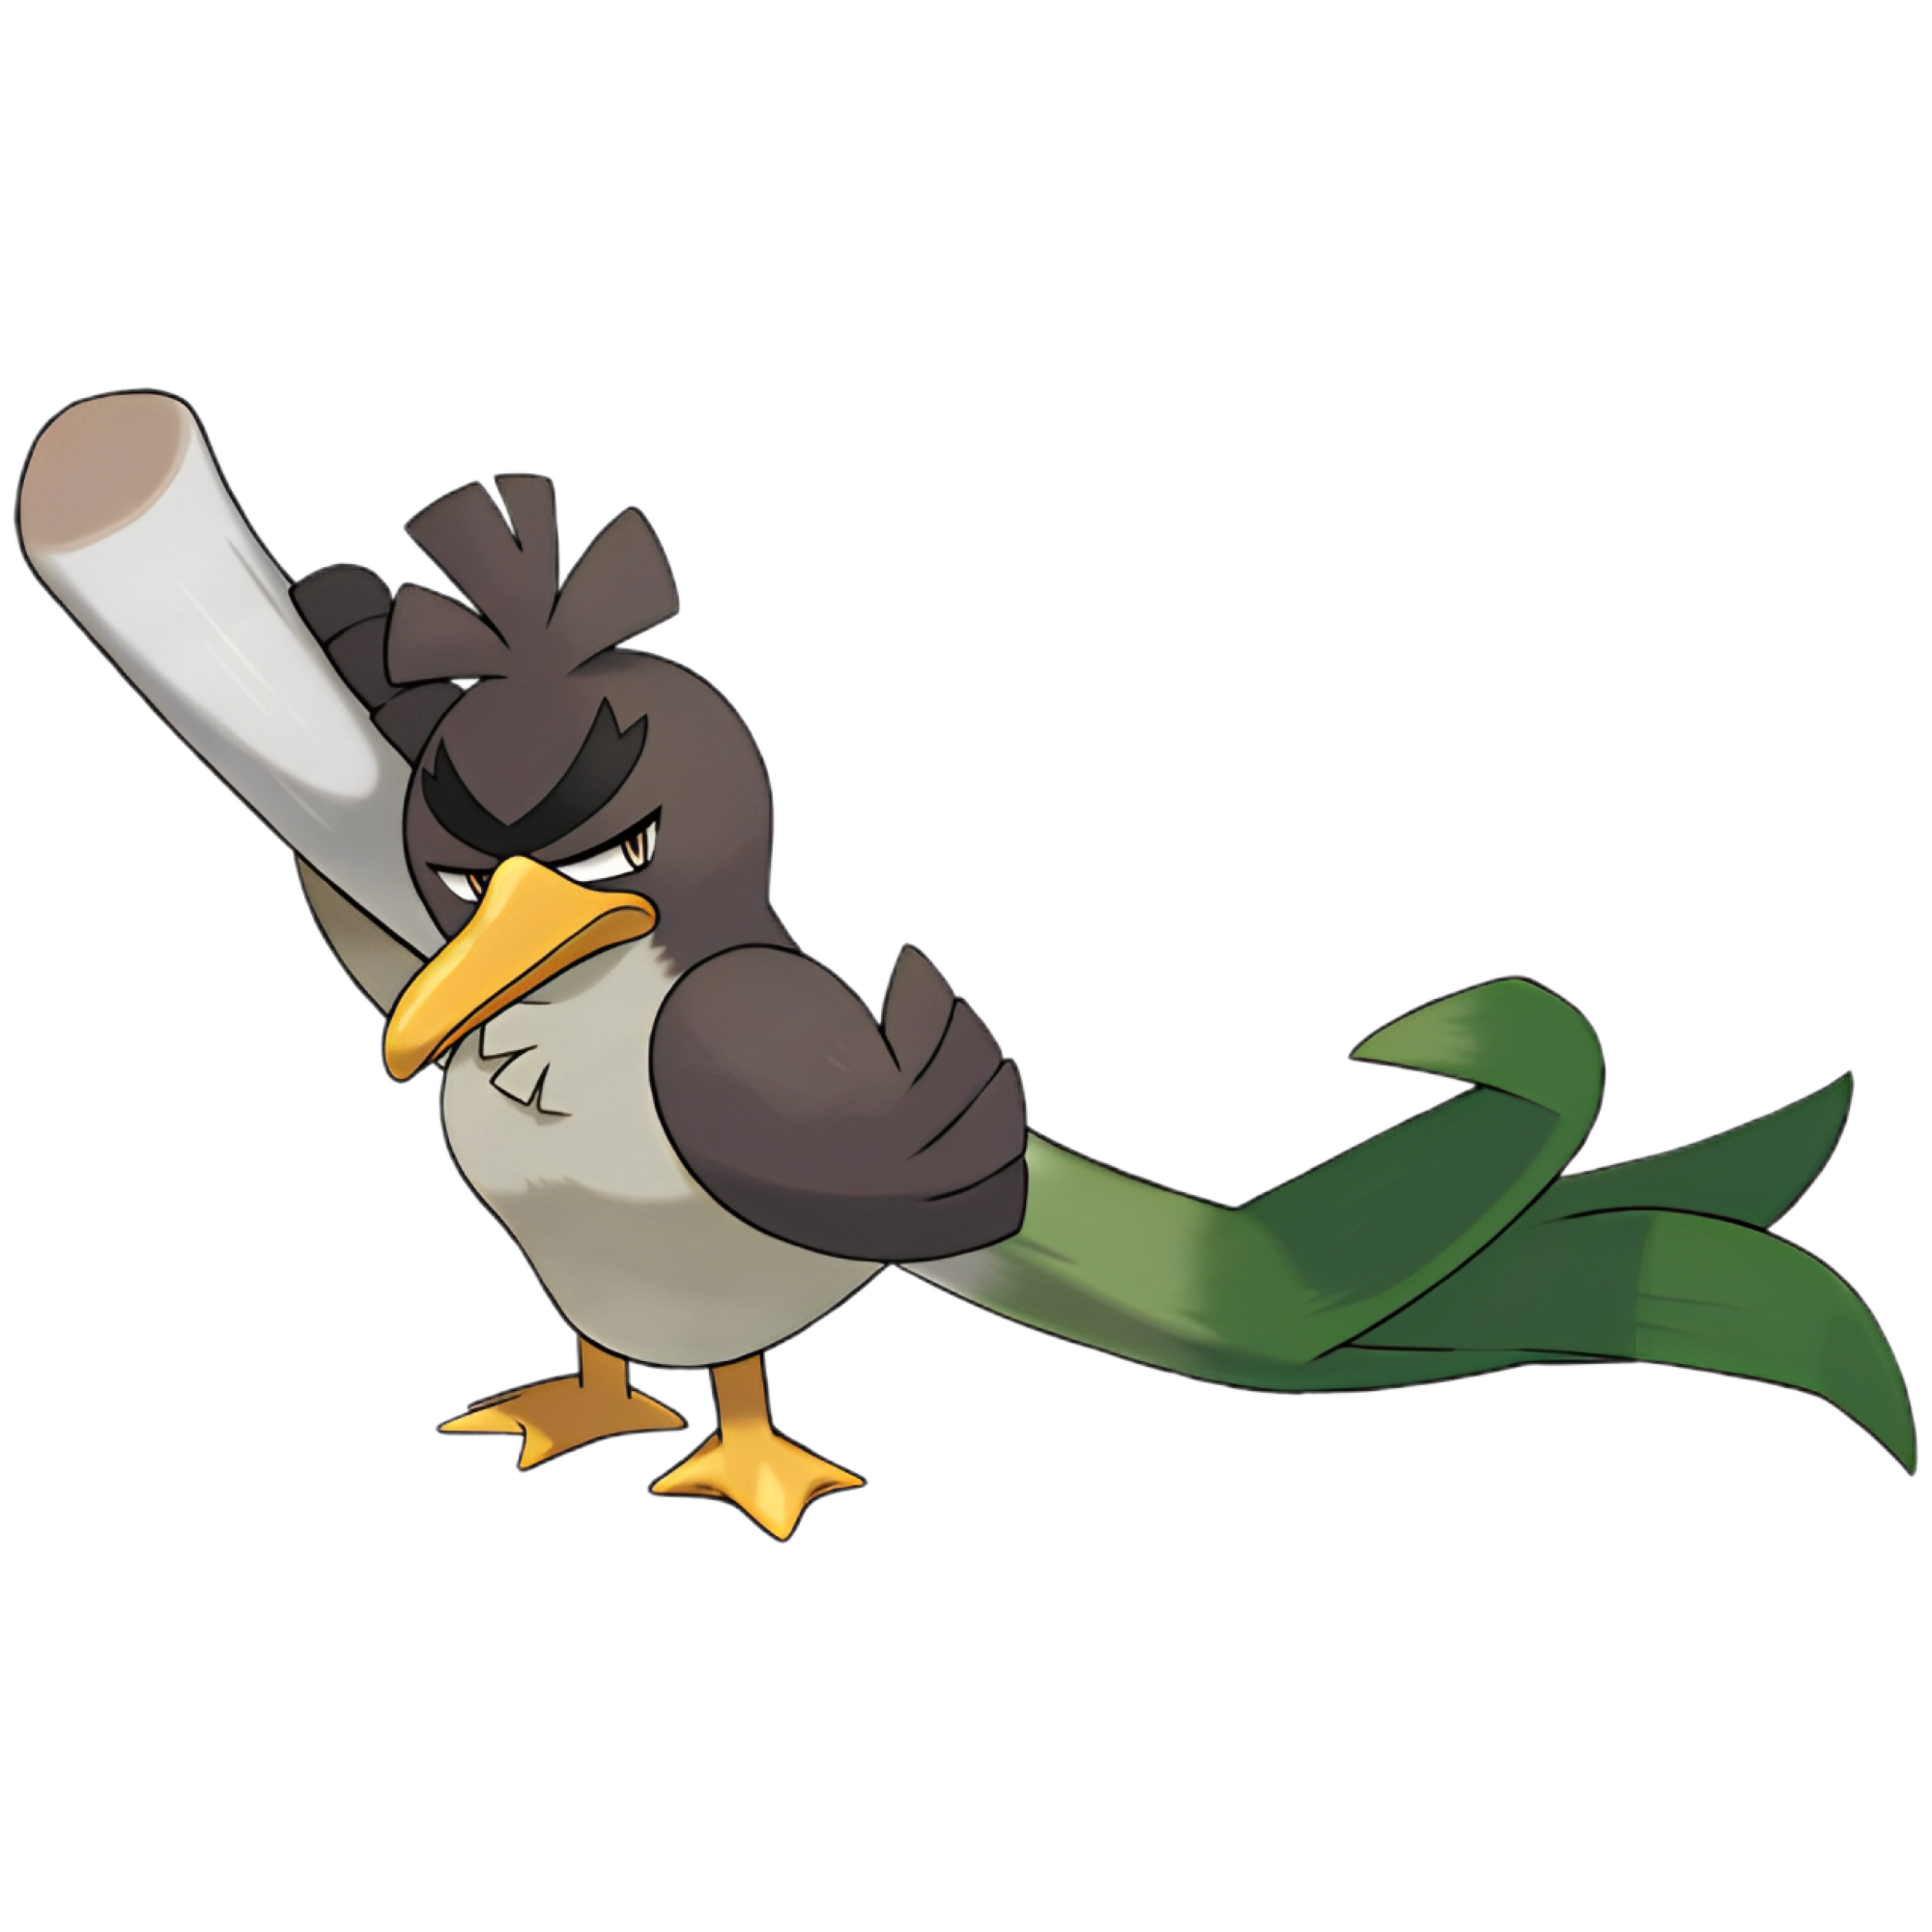 Holly's Farfetch'd, Pokémon Wiki